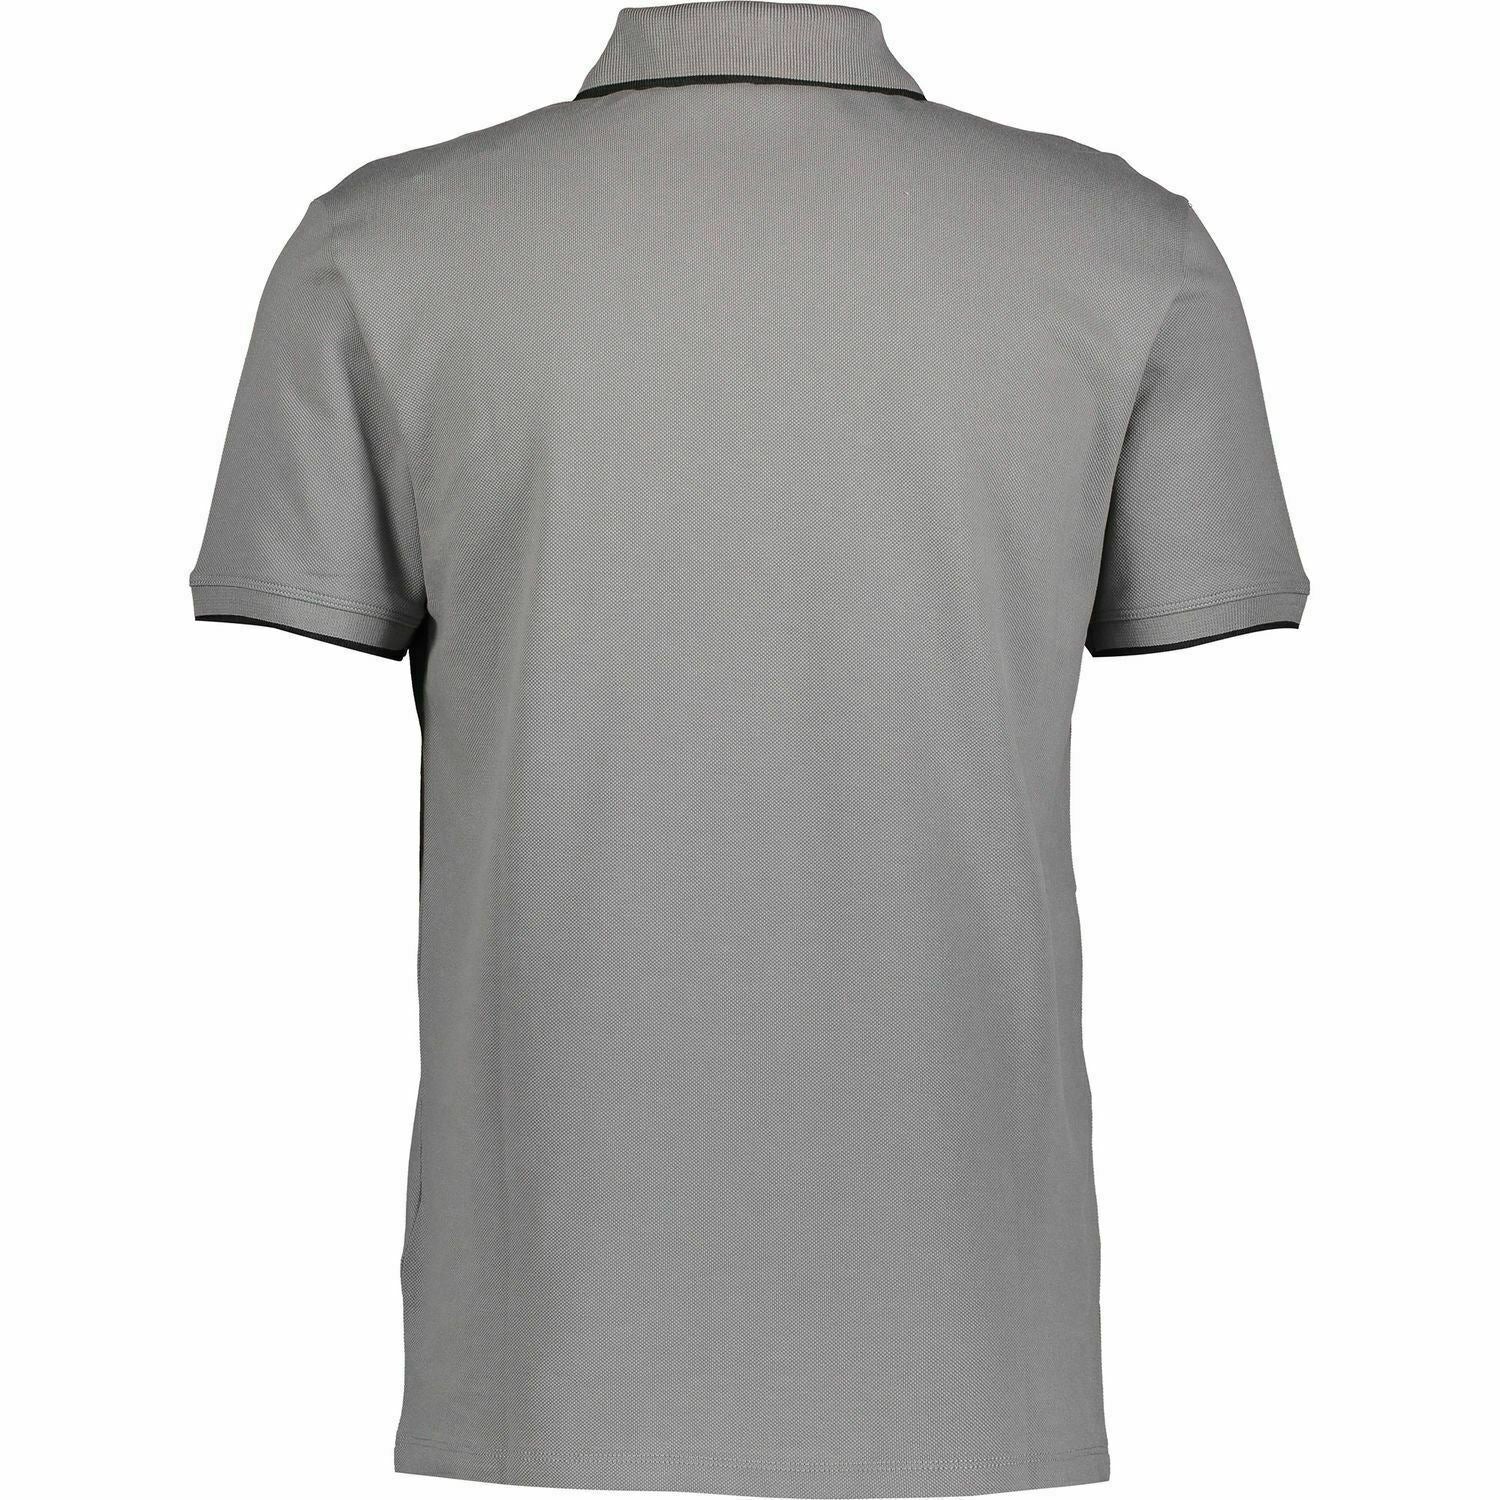 VERSACE COLLECTION Men's Grey Pique Zipped Polo Shirt, size S size M